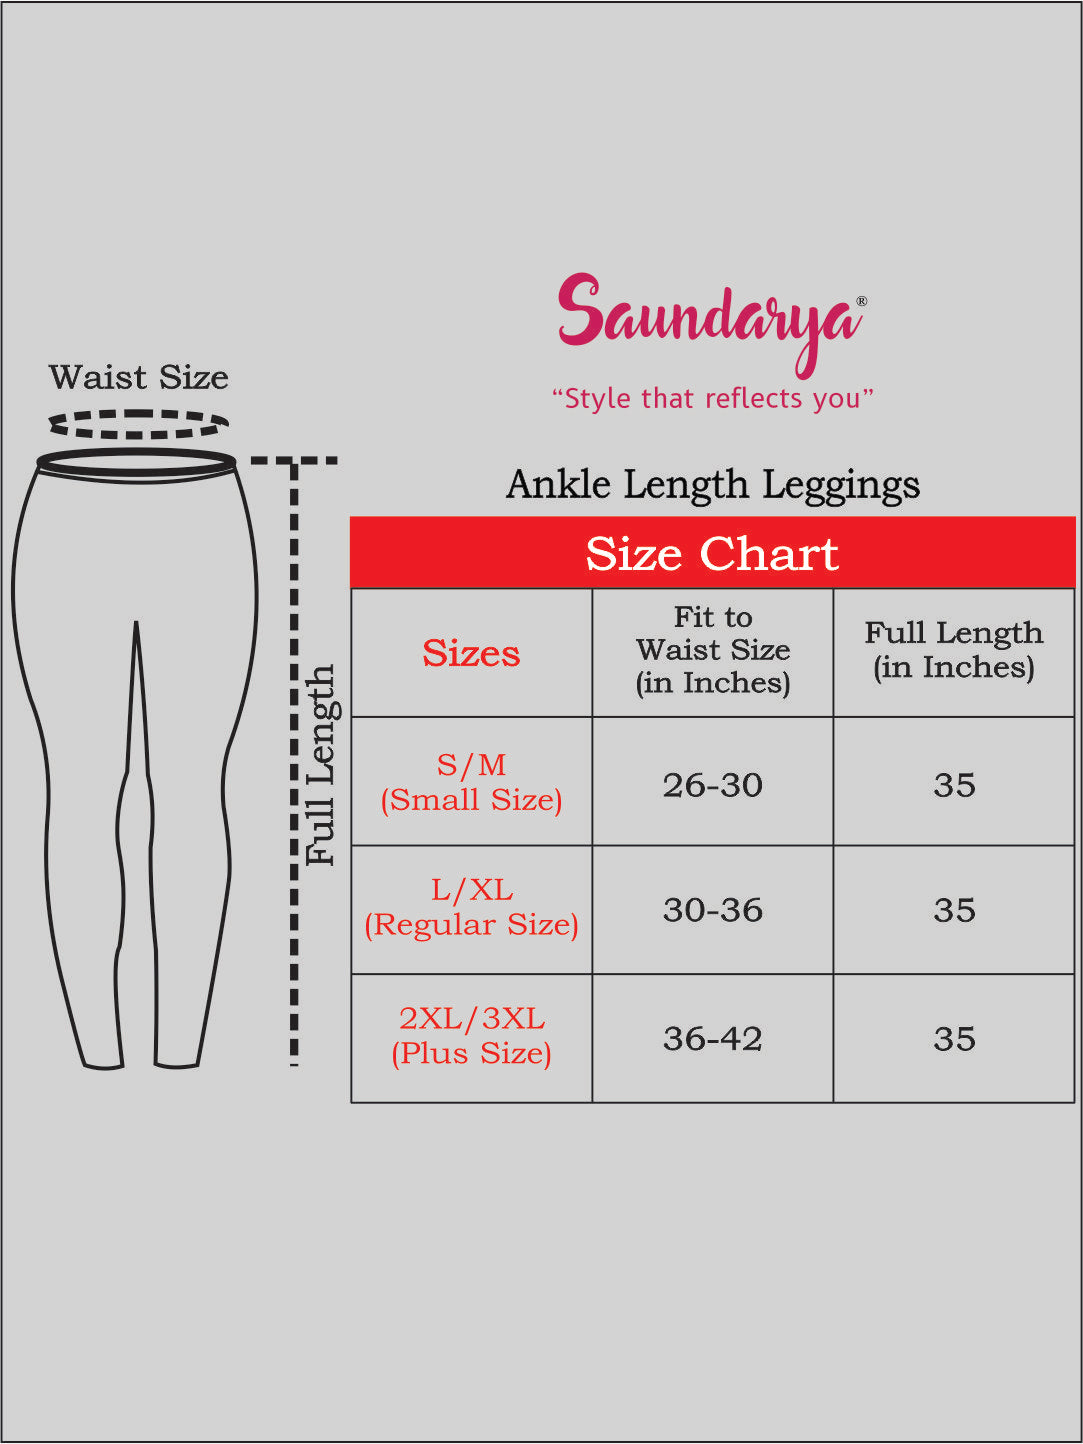 Saundarya Women's Coral Red Ankle Length Leggings Cotton